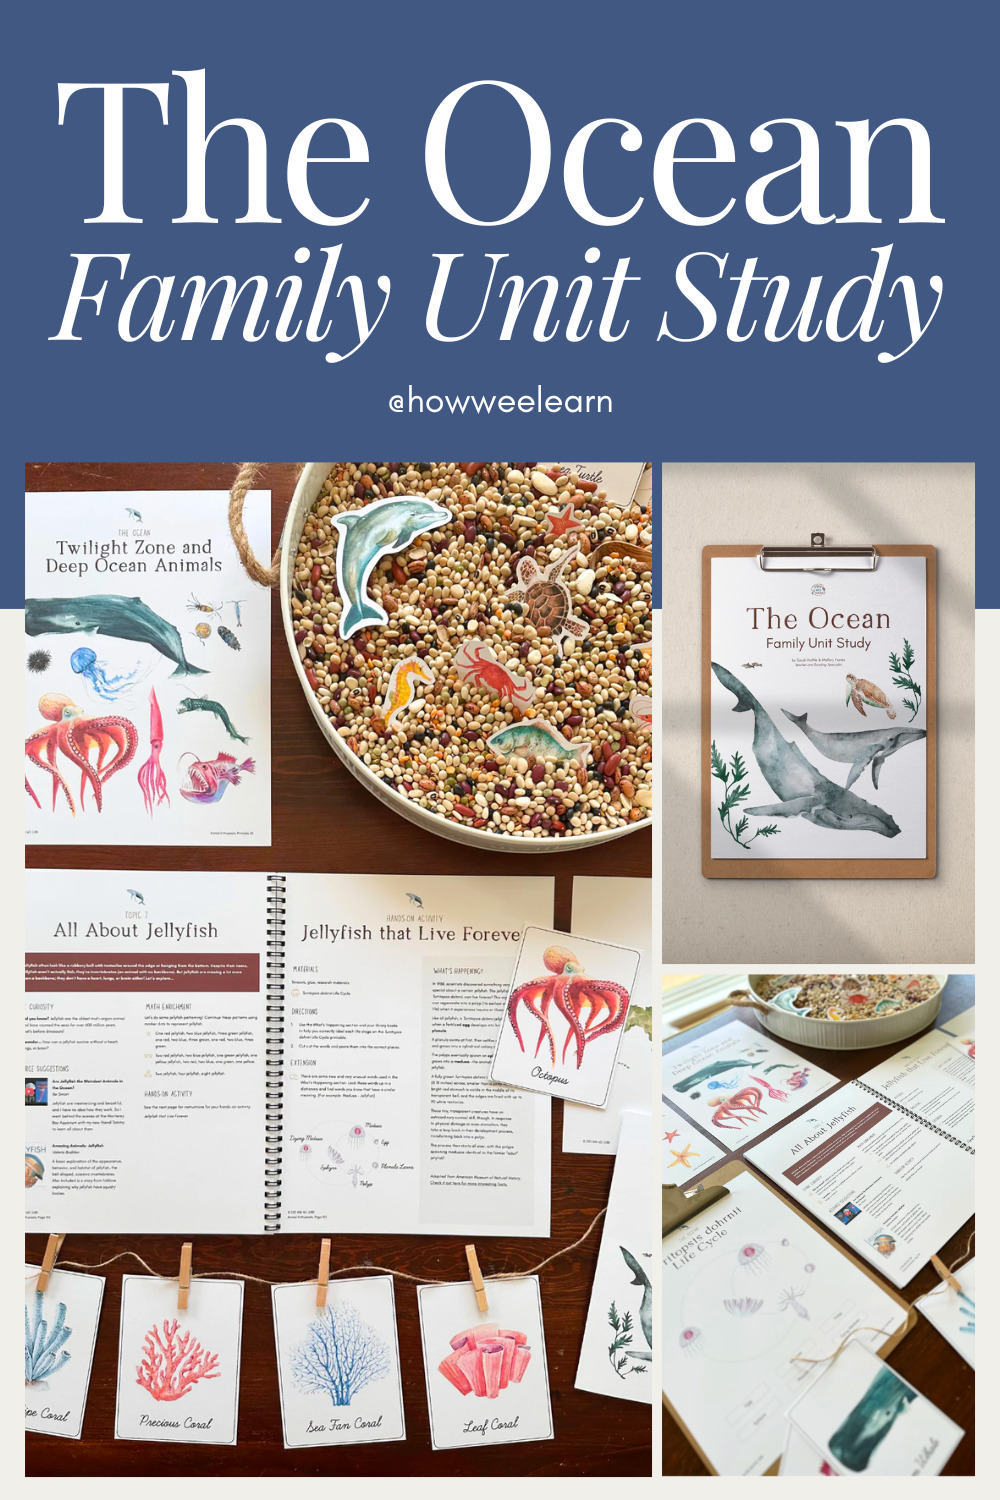 The Ocean Family Unit Study